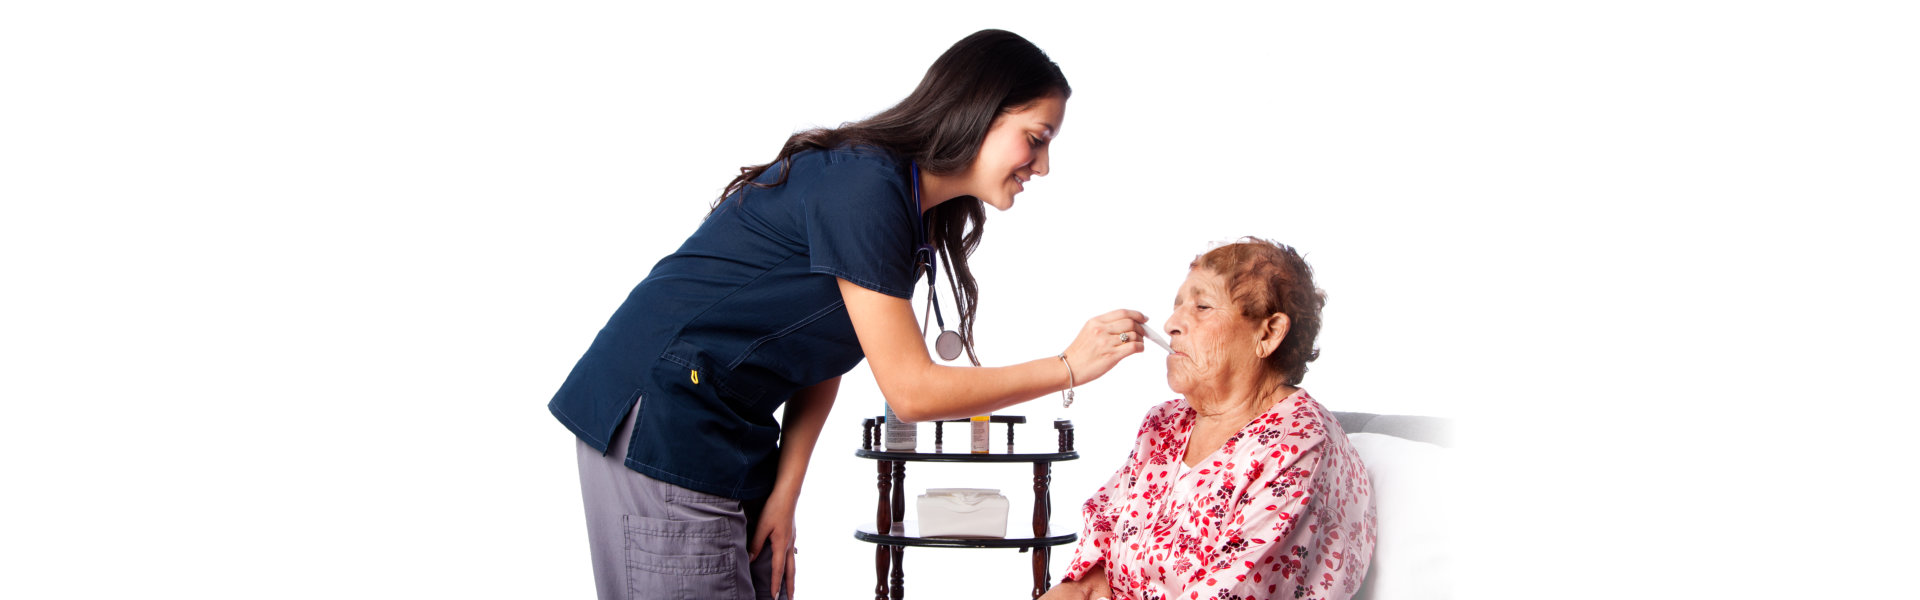 Nurse measuring temperature of senior woman